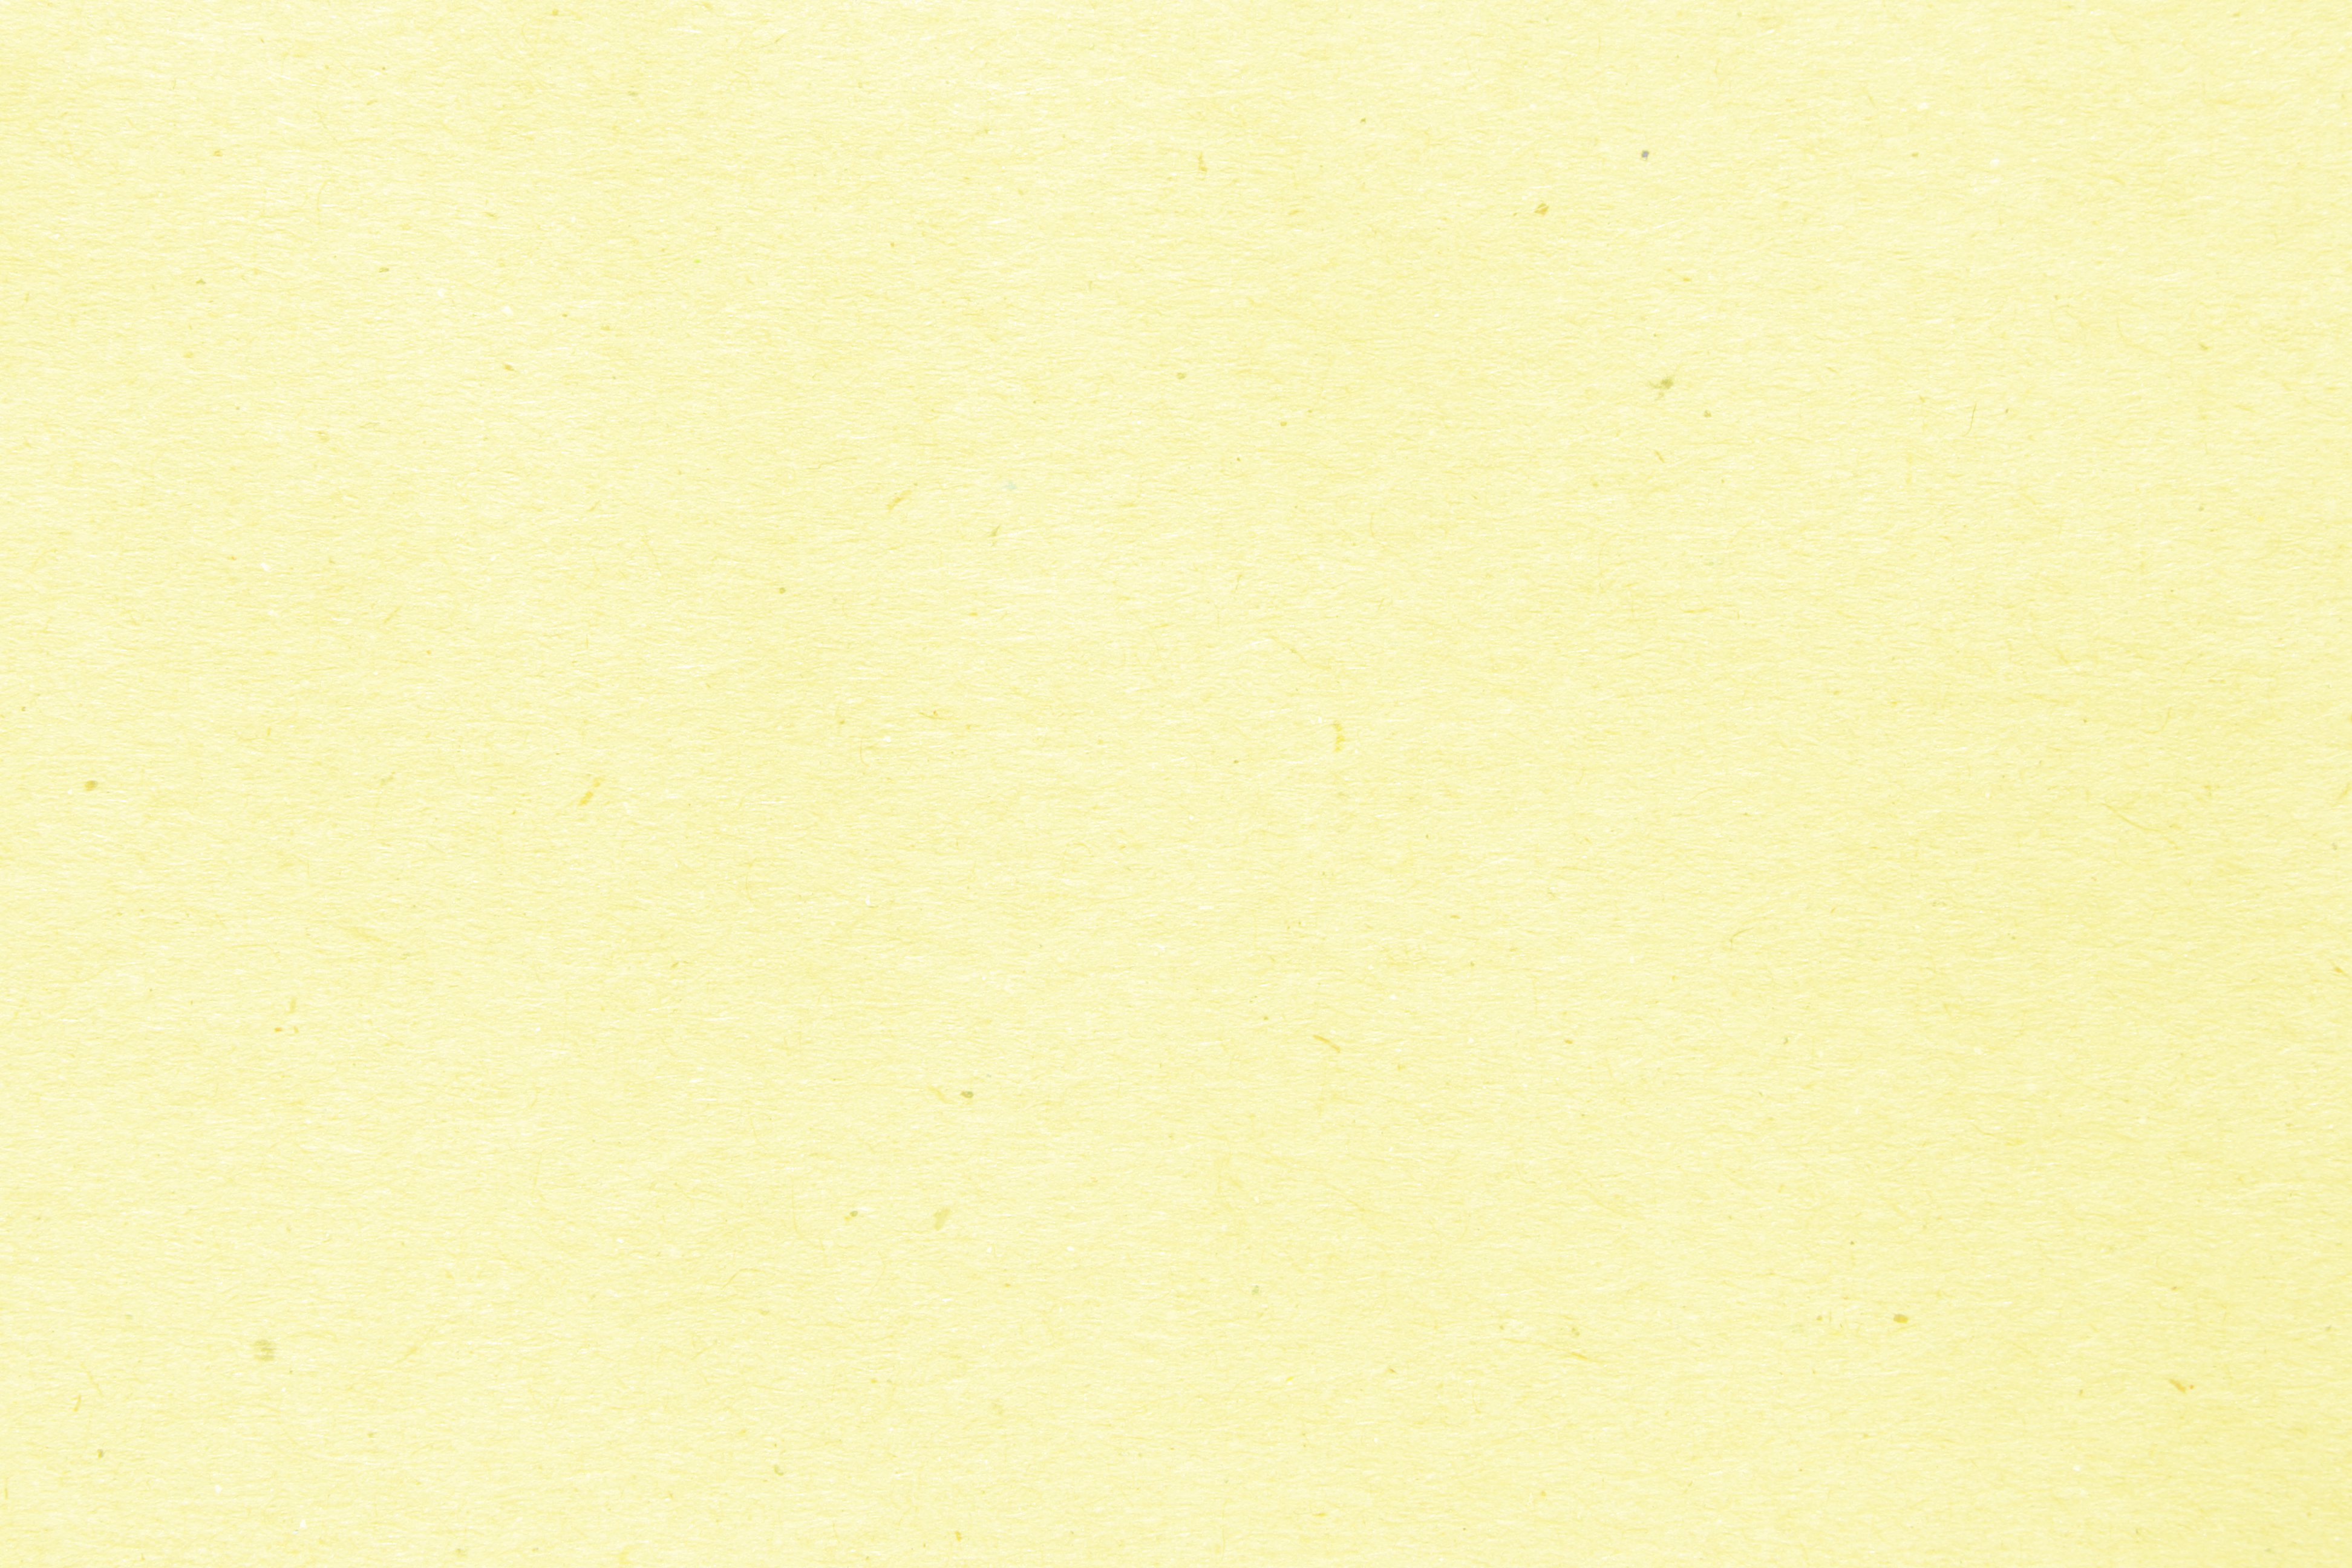 Light Yellow Paper Texture With Flecks Photos Public Domain